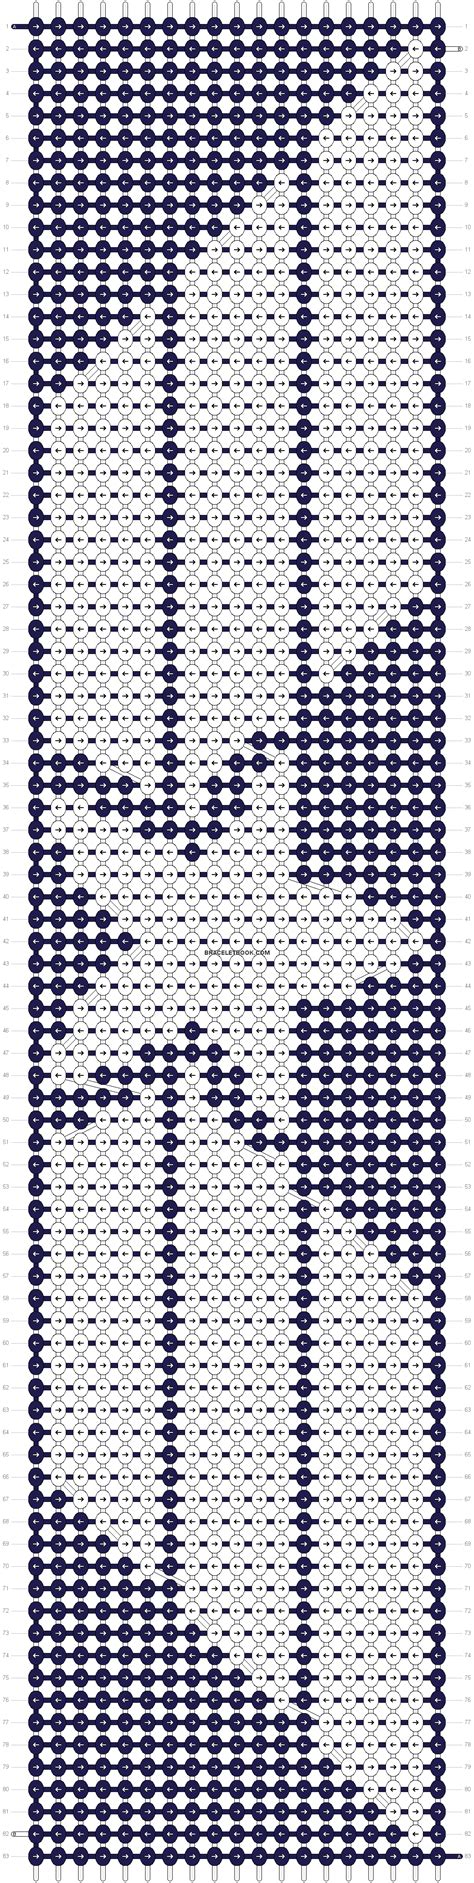 Alpha Pattern 14364 Alpha Patterns Pattern Bead